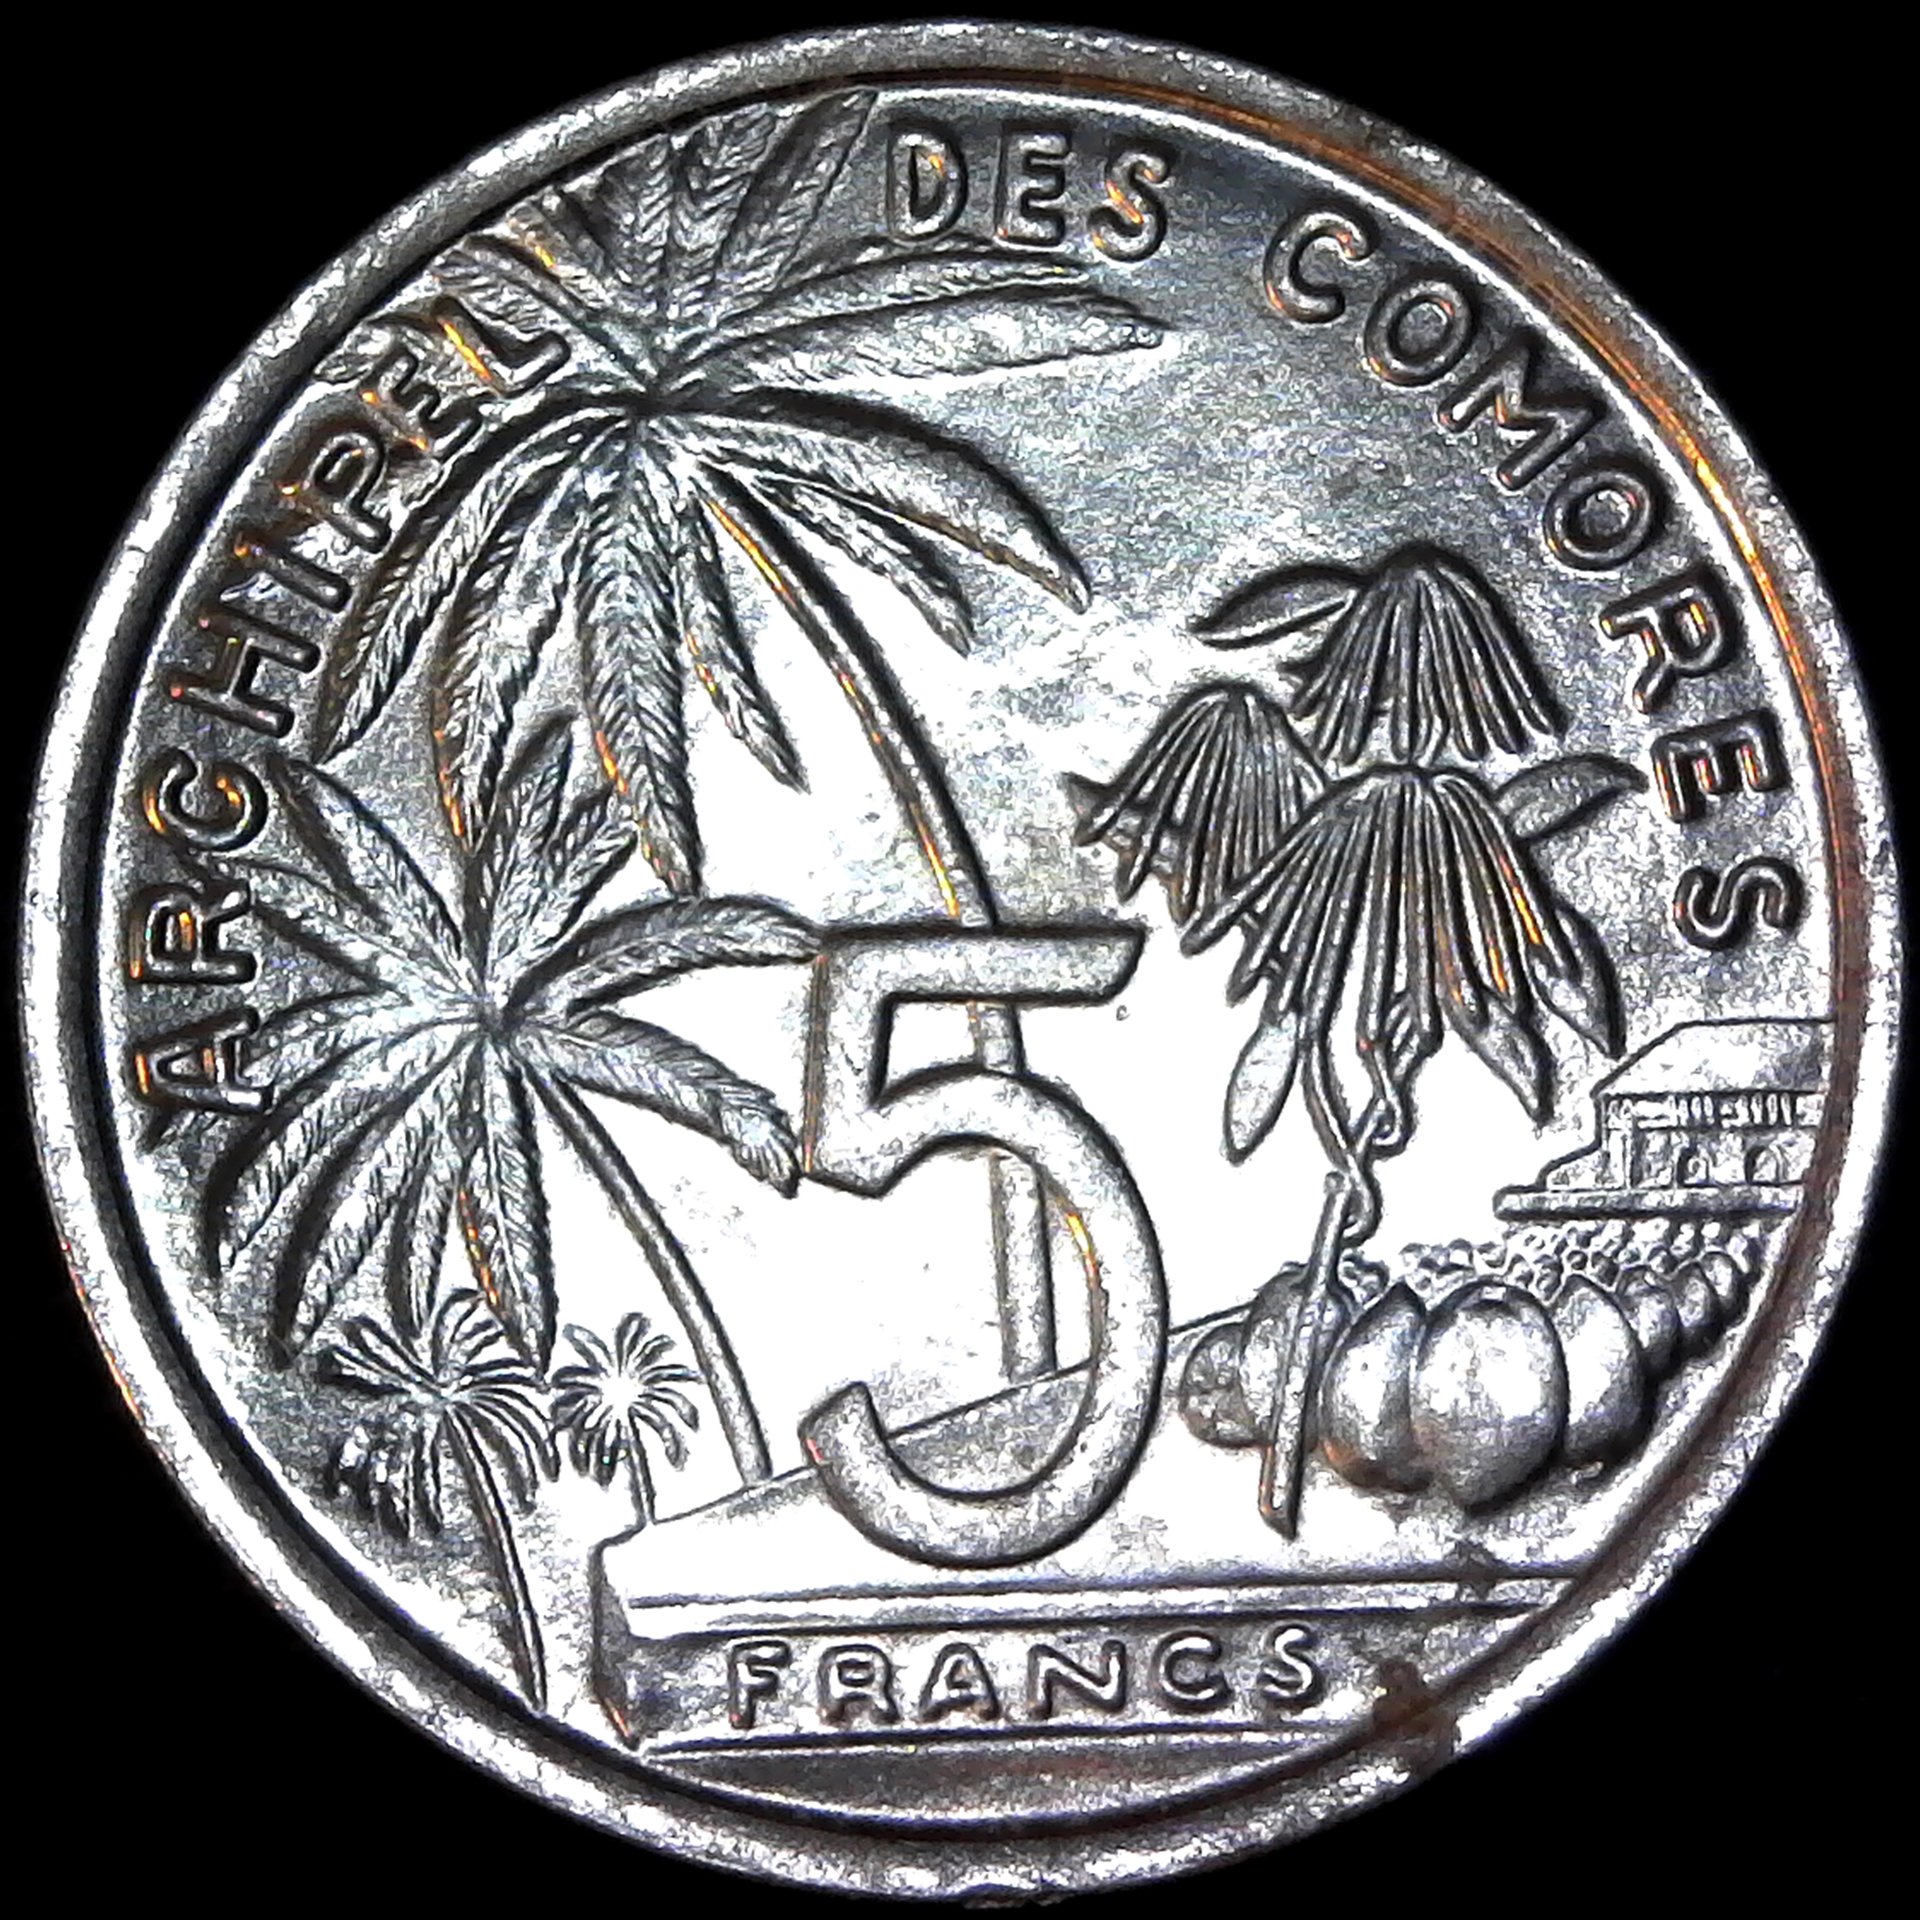 Comoros Islands 5 Francs 1964 obv.jpg